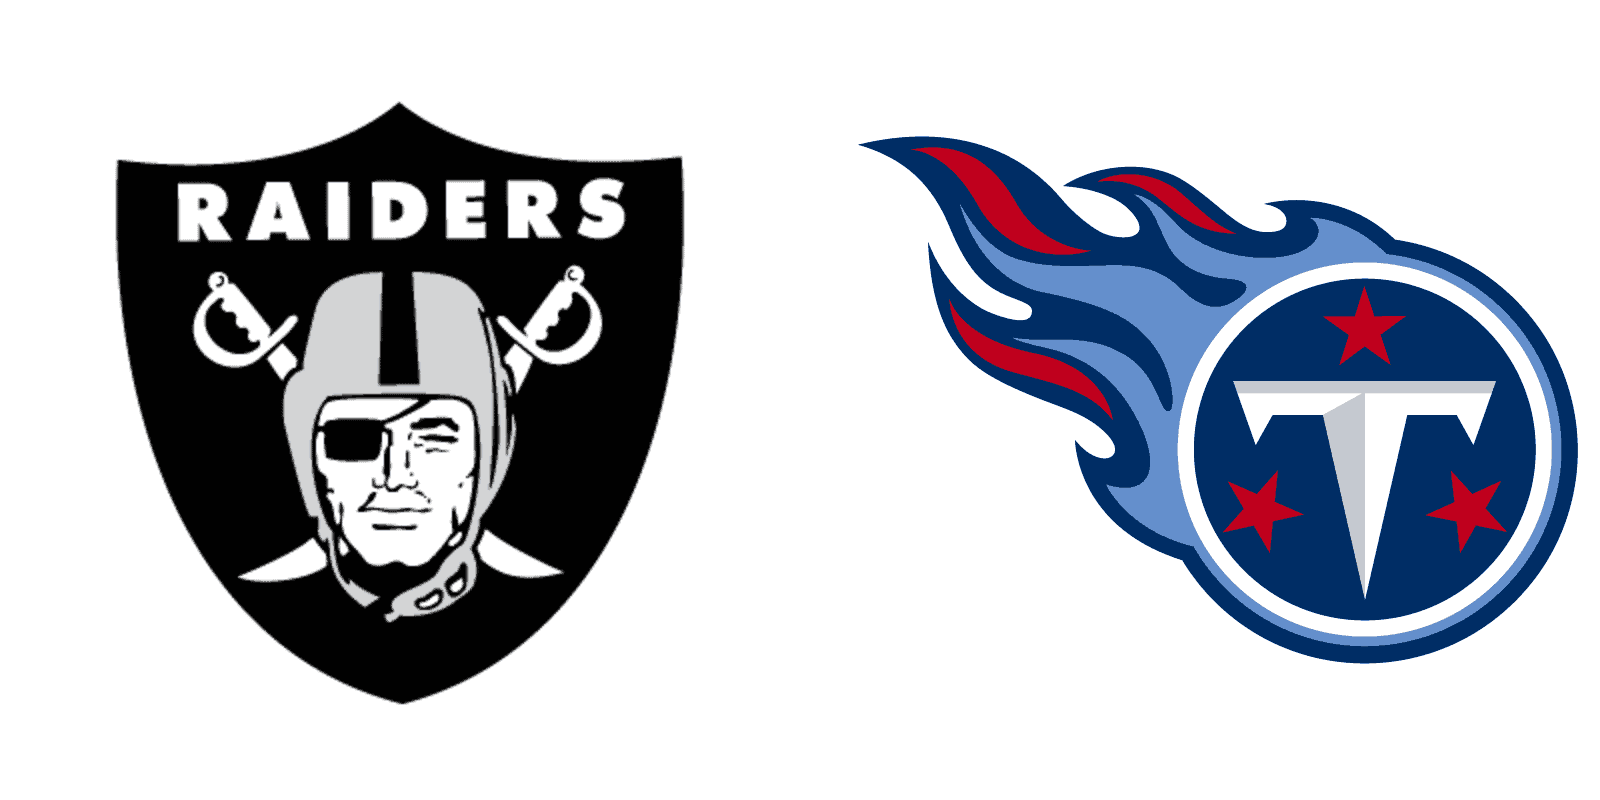 Las Vegas Raiders and Tennessee Titans logos